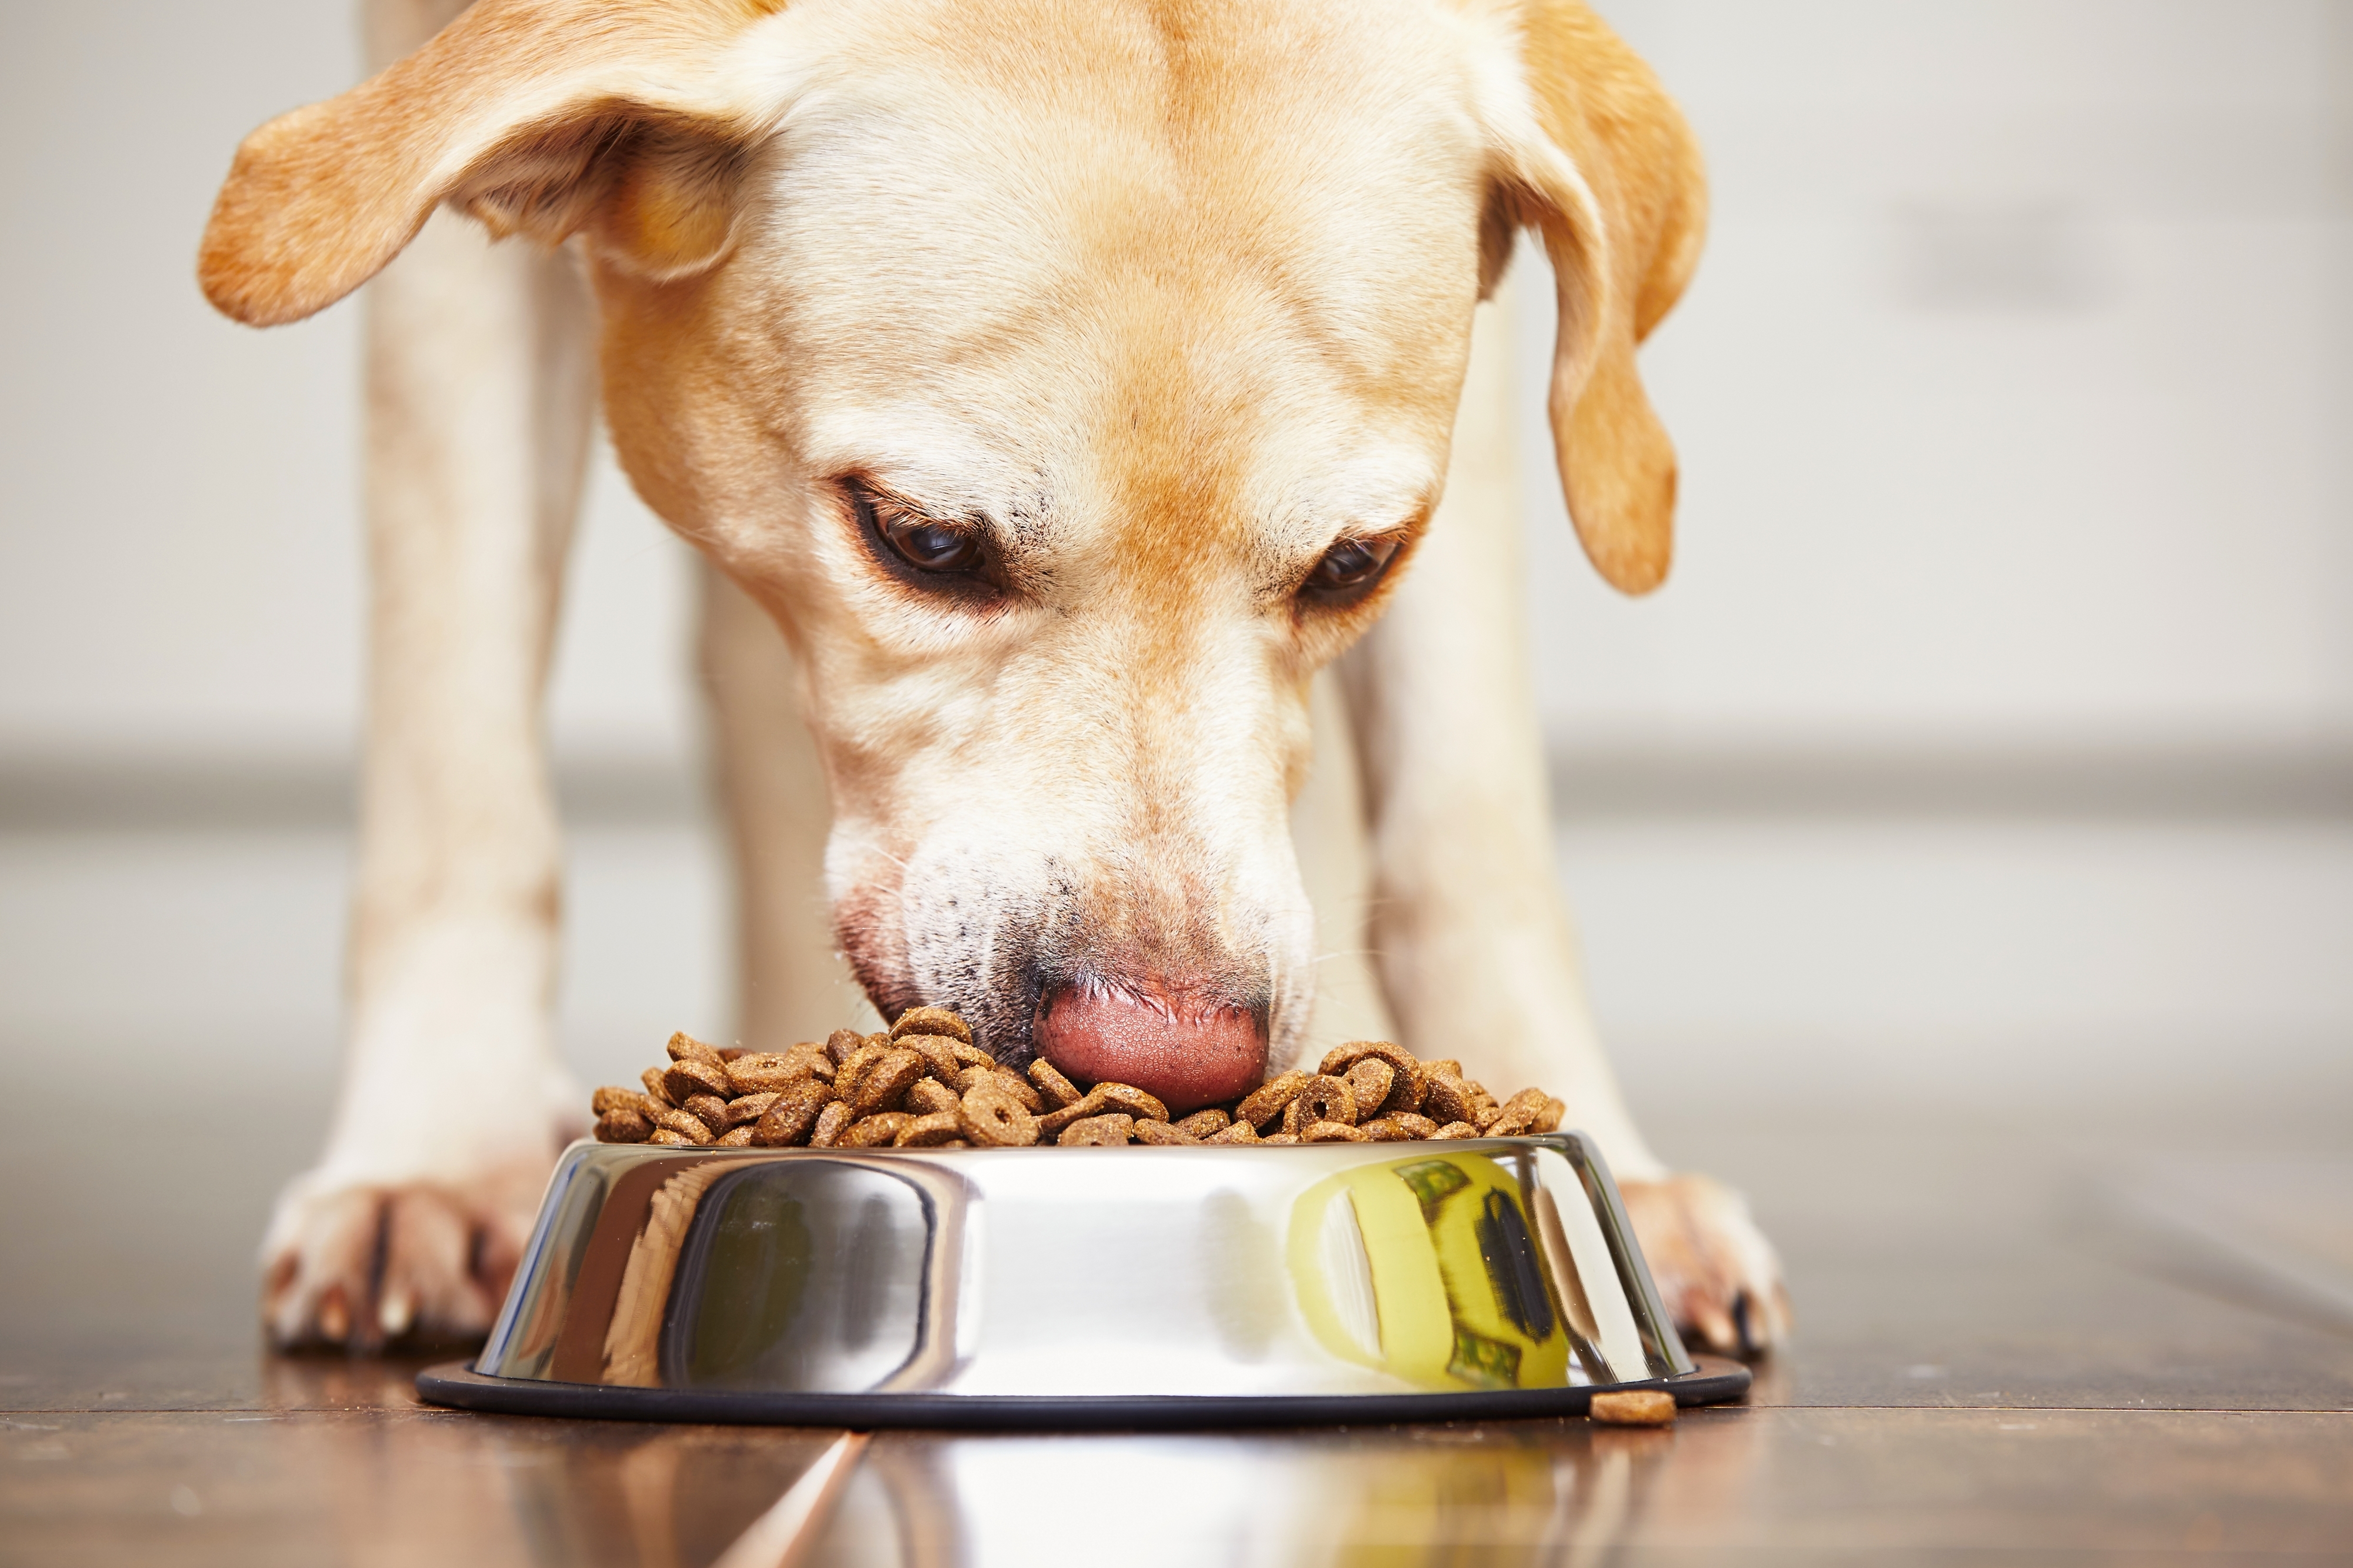 4 съела собака. Собака кушает. Еда для собак. Собака ест корм. Животные и еда.